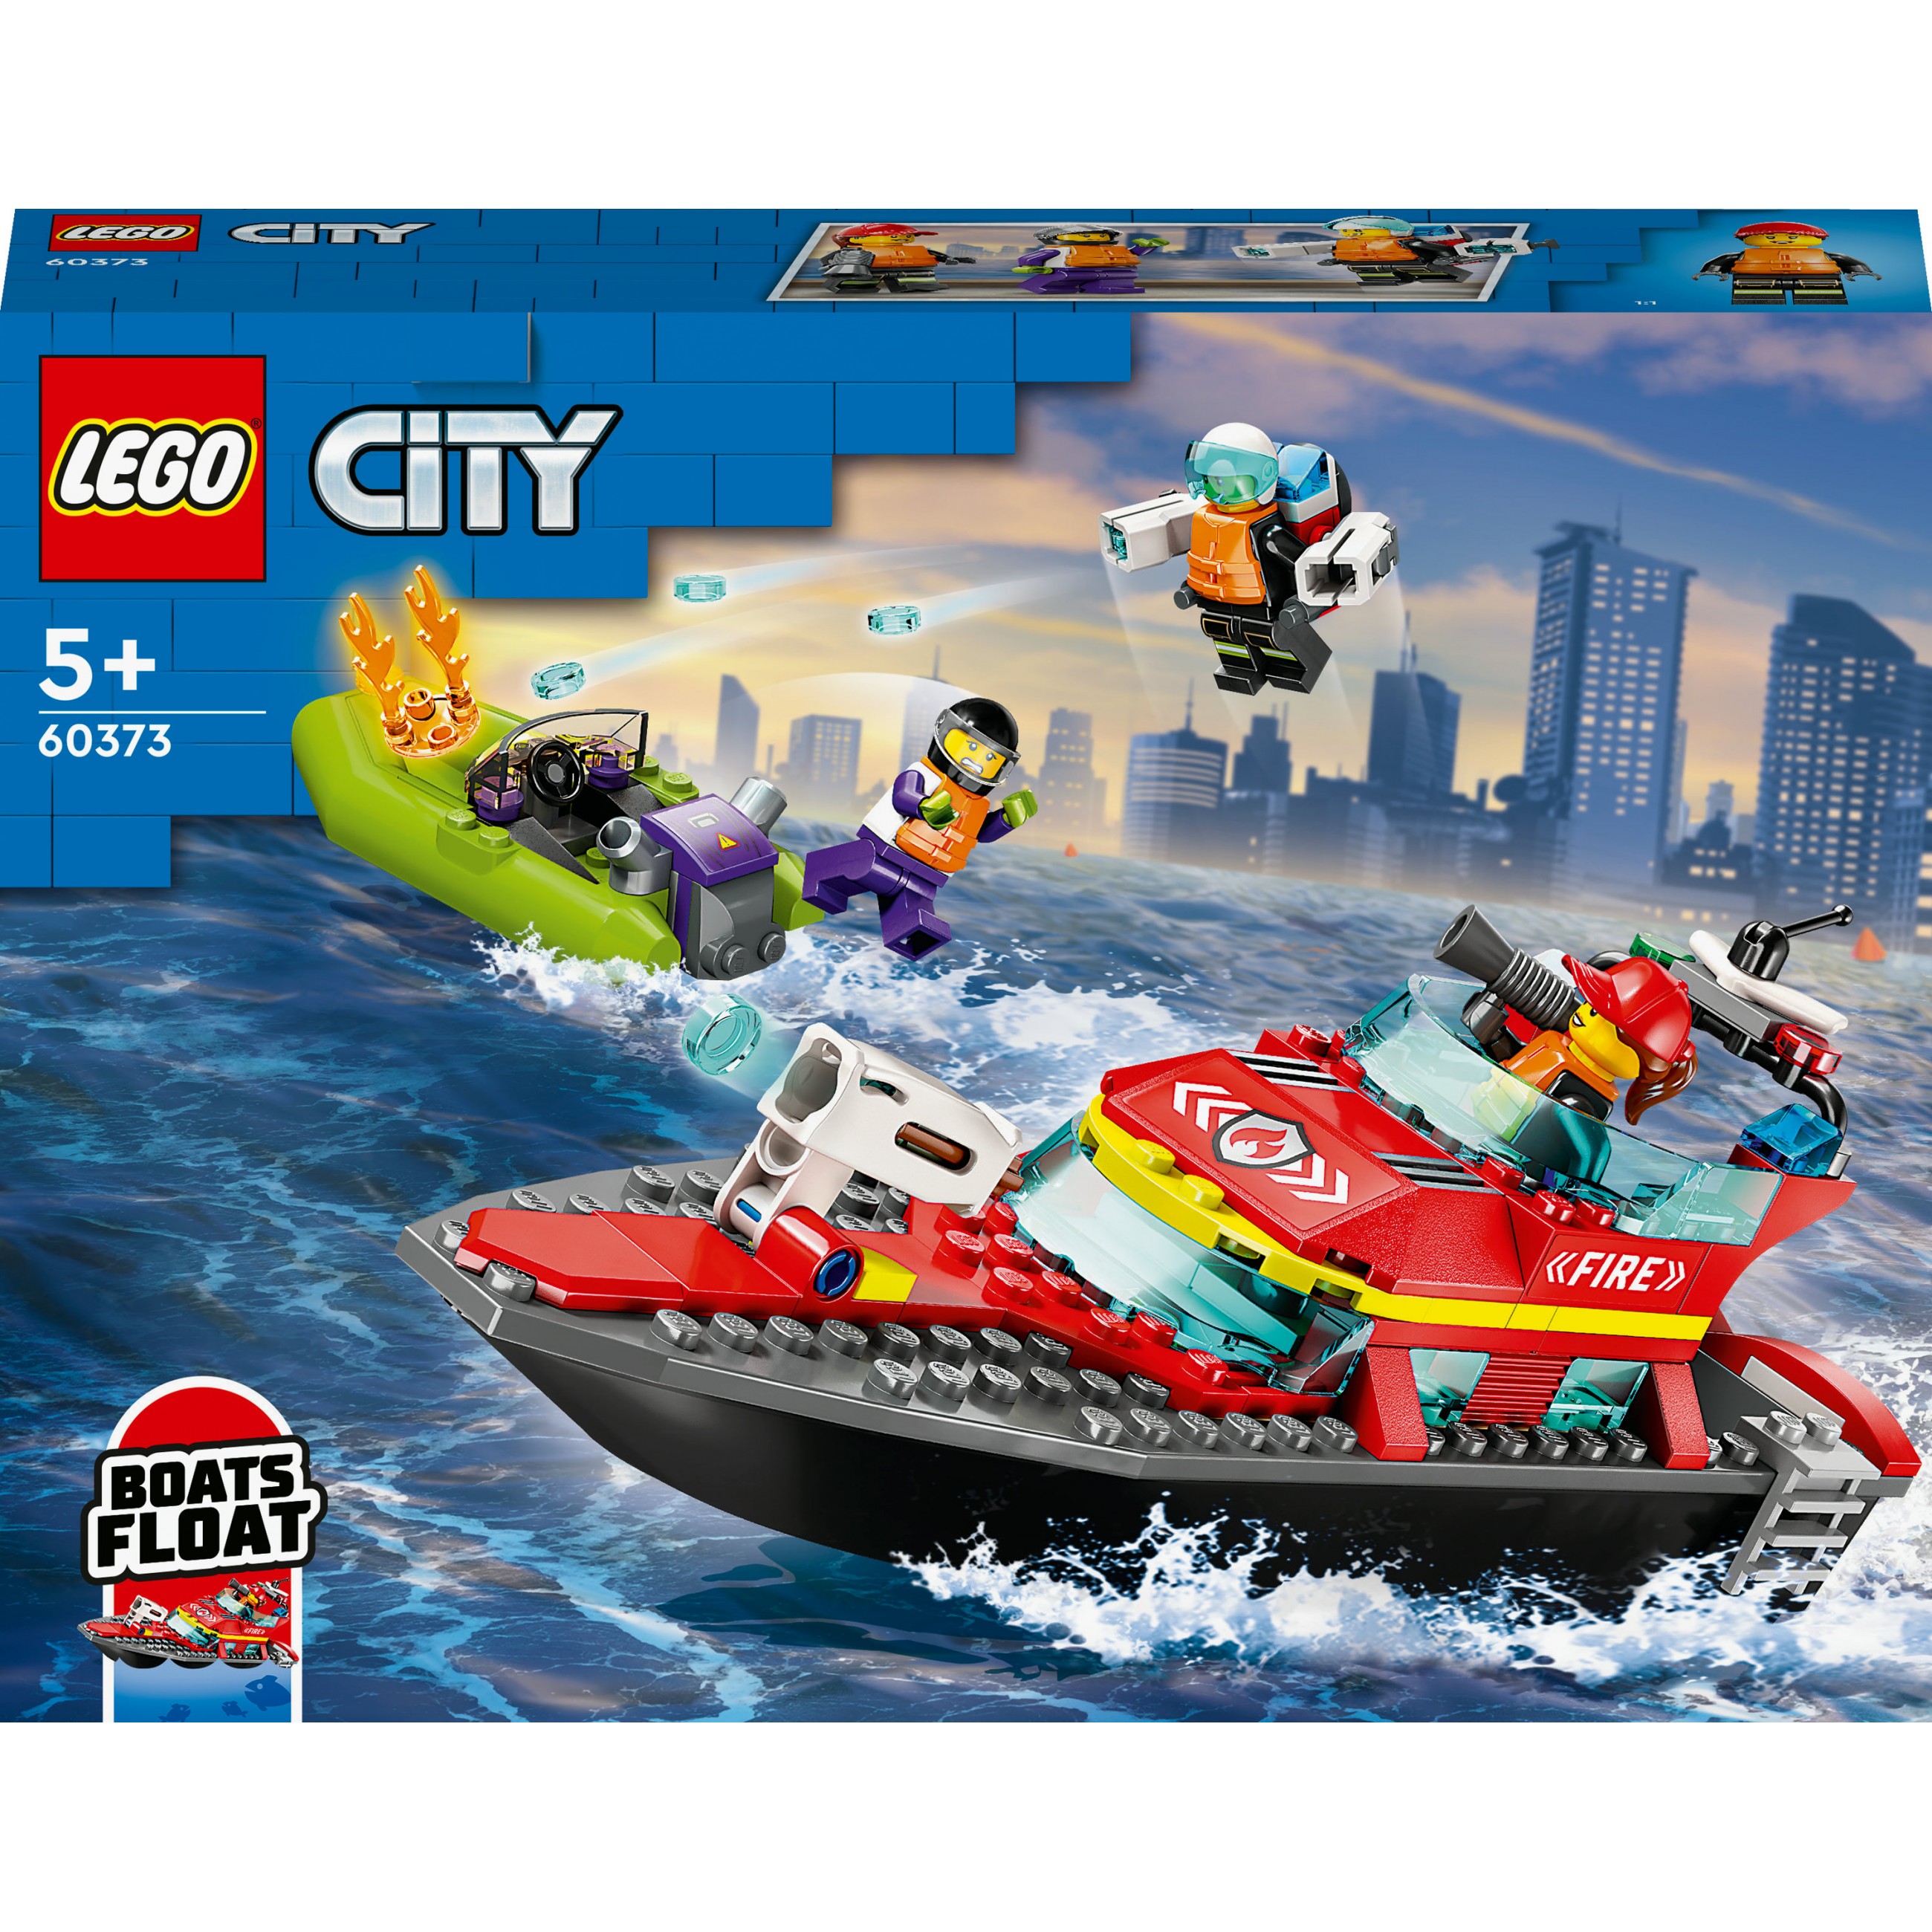 LEGO City 60373 building toy